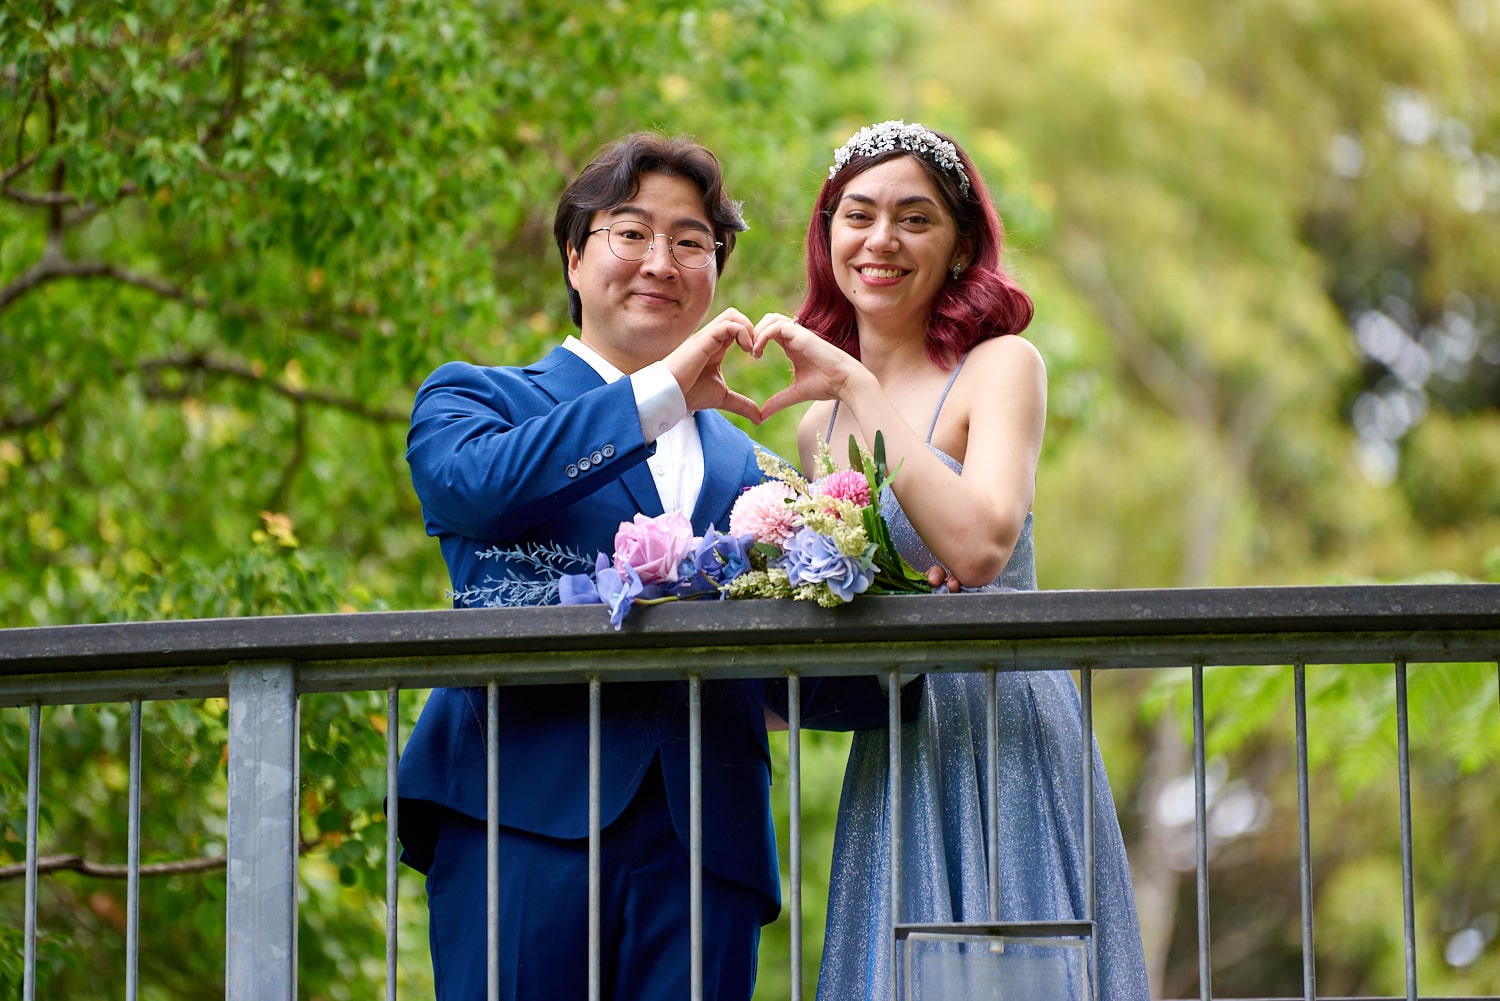 Small Park Wedding in Muston Park Chatswood Sydney. Couple, hand love heart shape symbol. Photo by orlandosydney.com